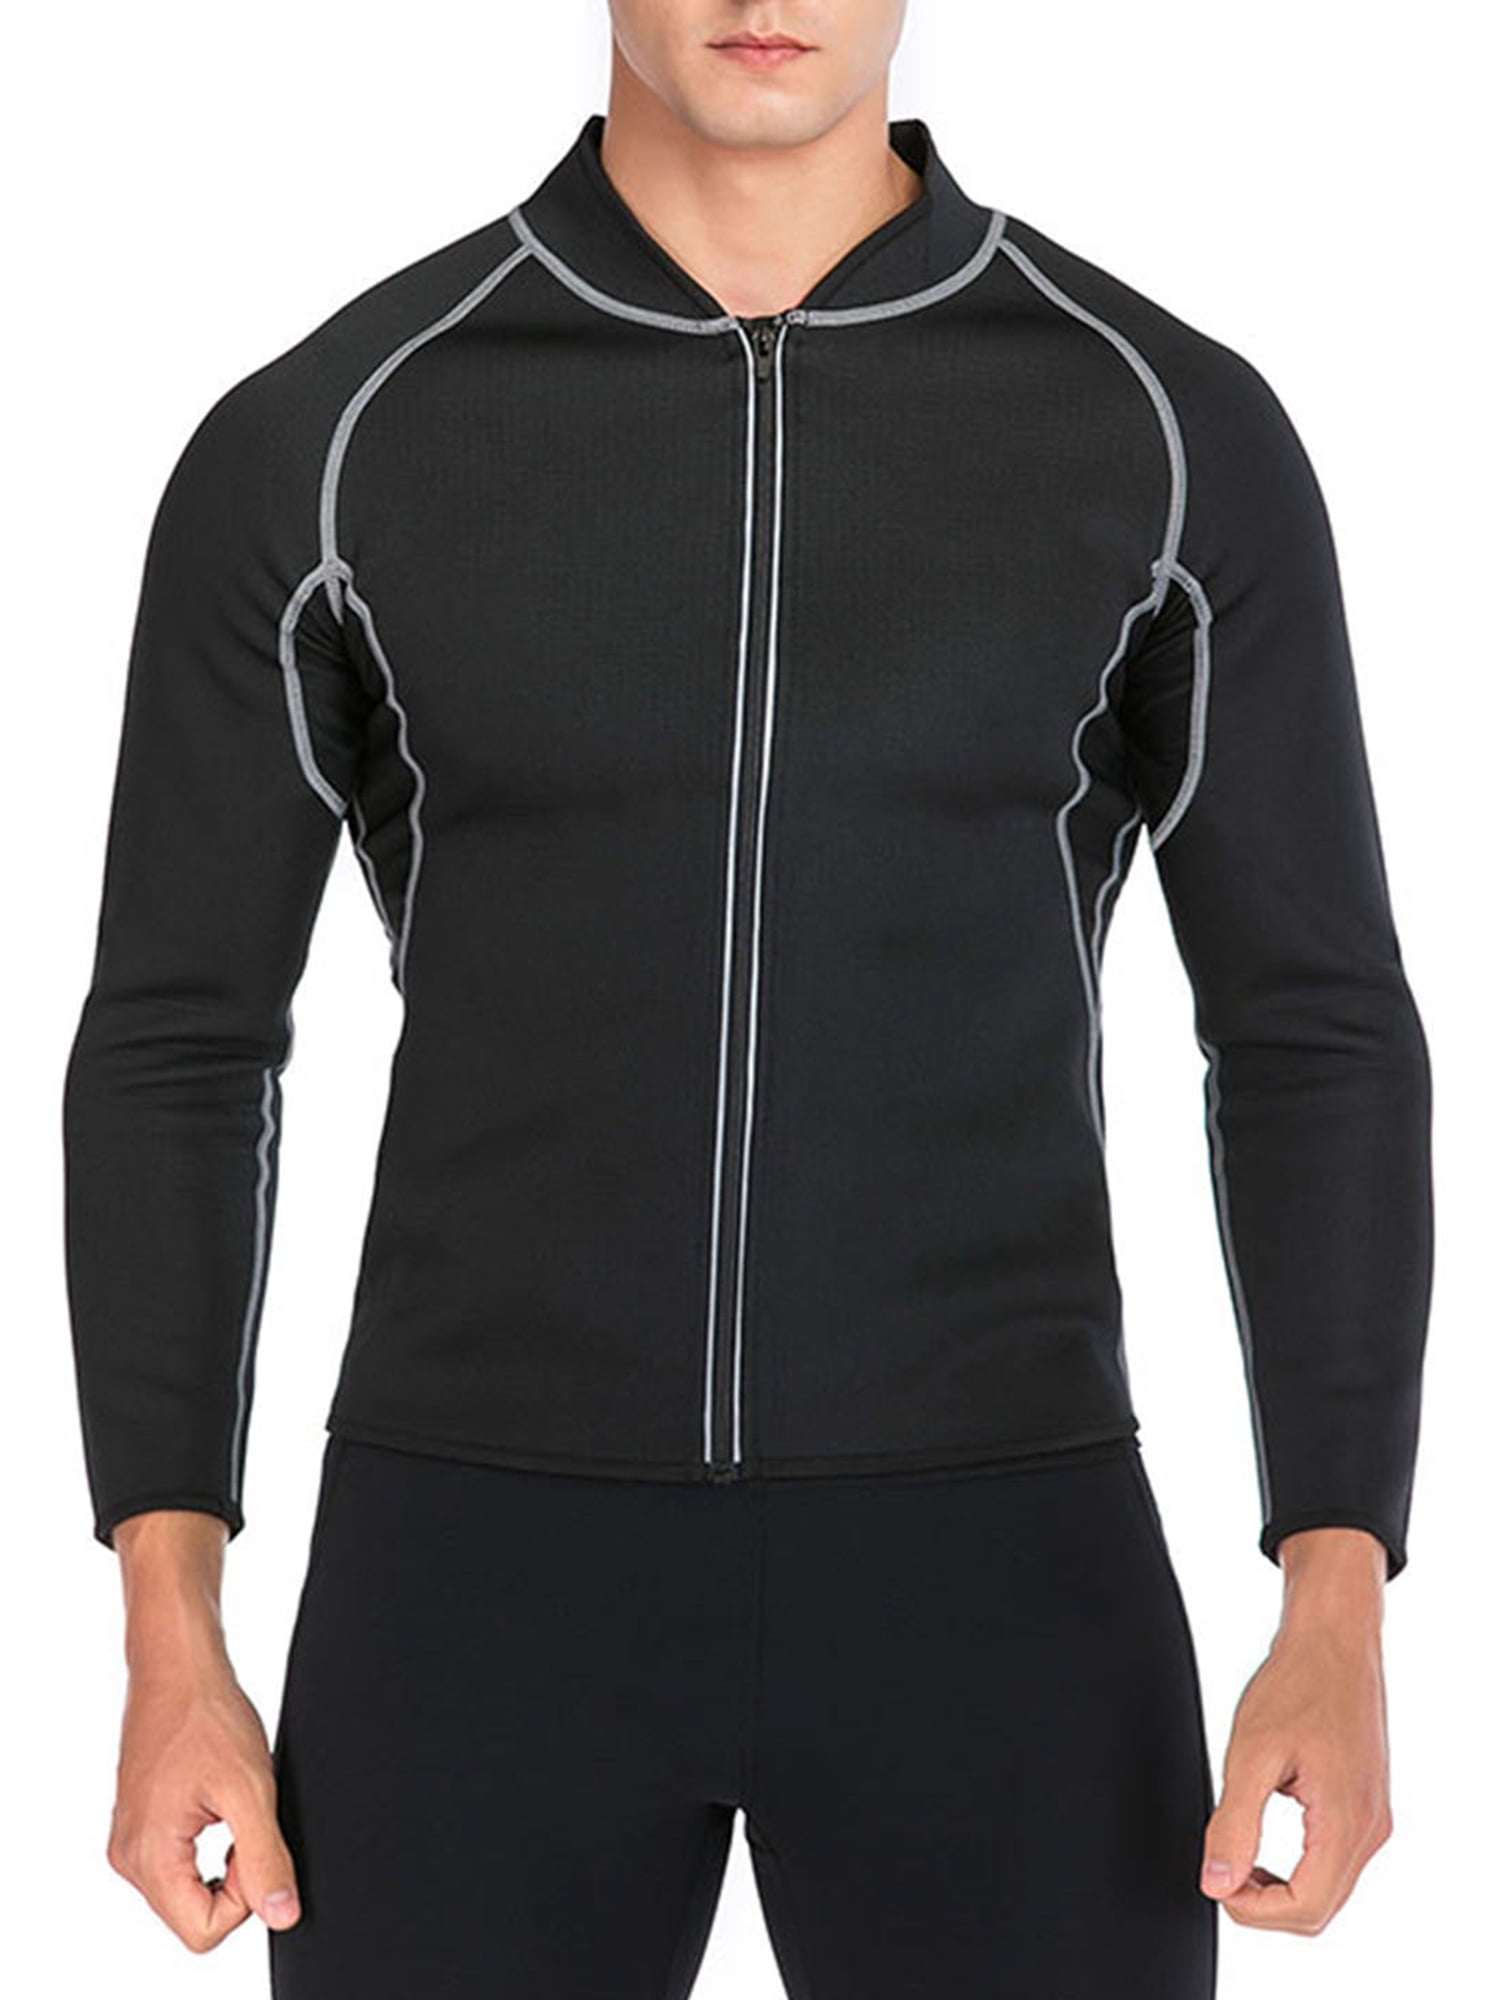 Mens Sweat Workout Suit Fat Burning Neoprene Fitness Jacket Zipper Firm Control 